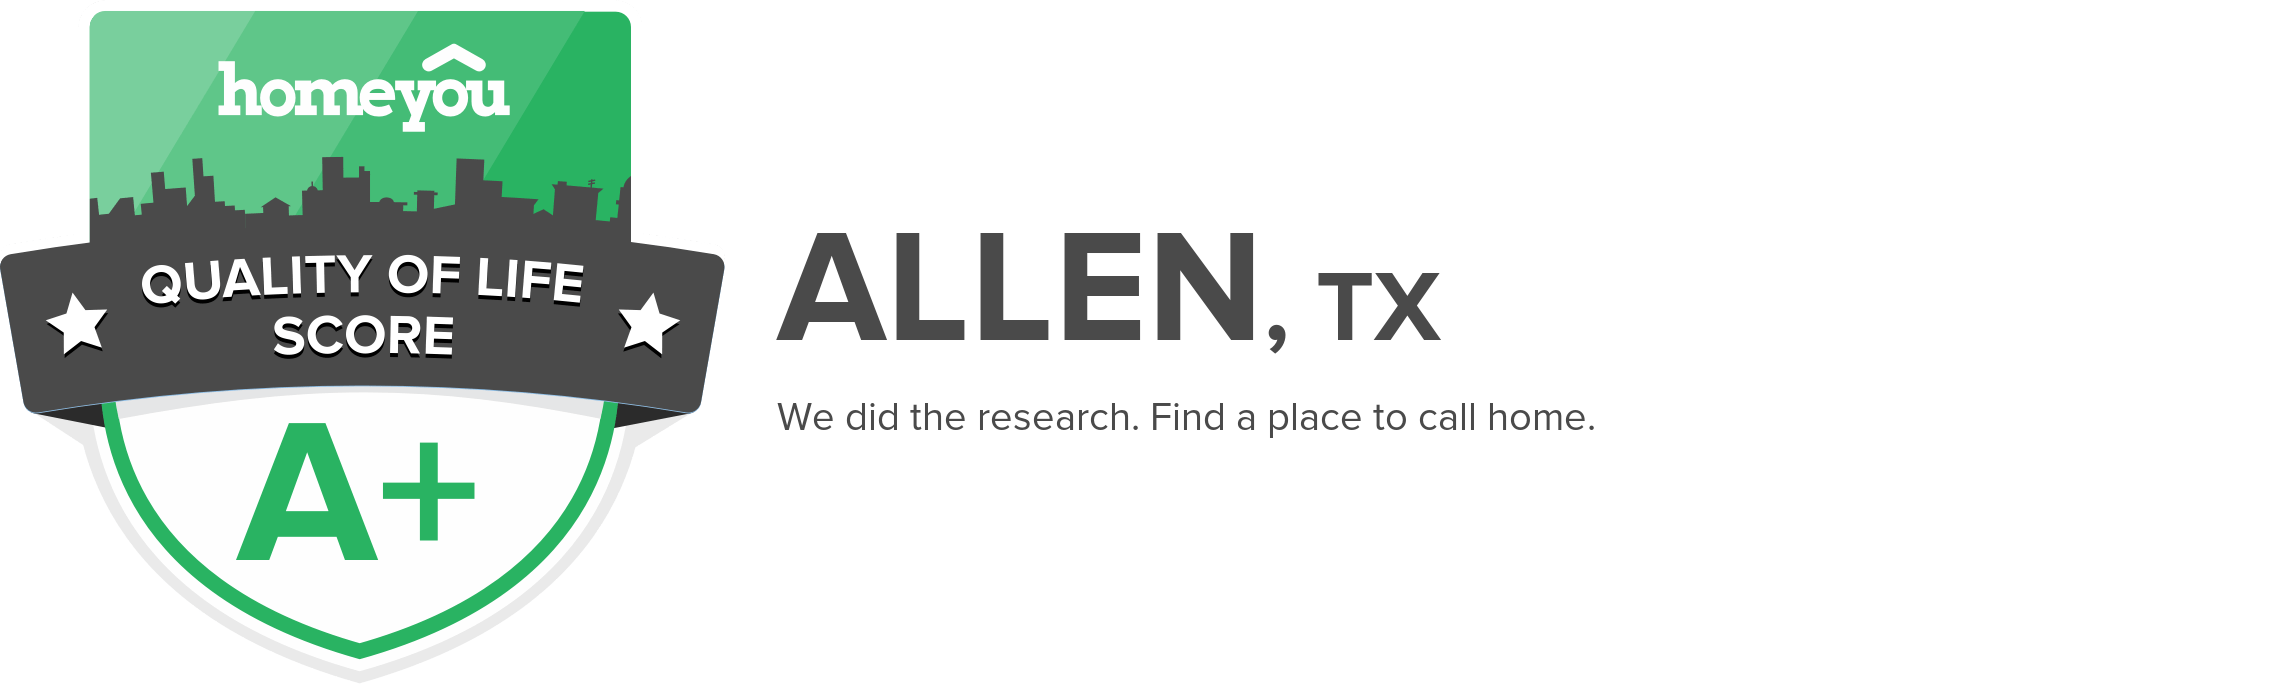 Allen, TX